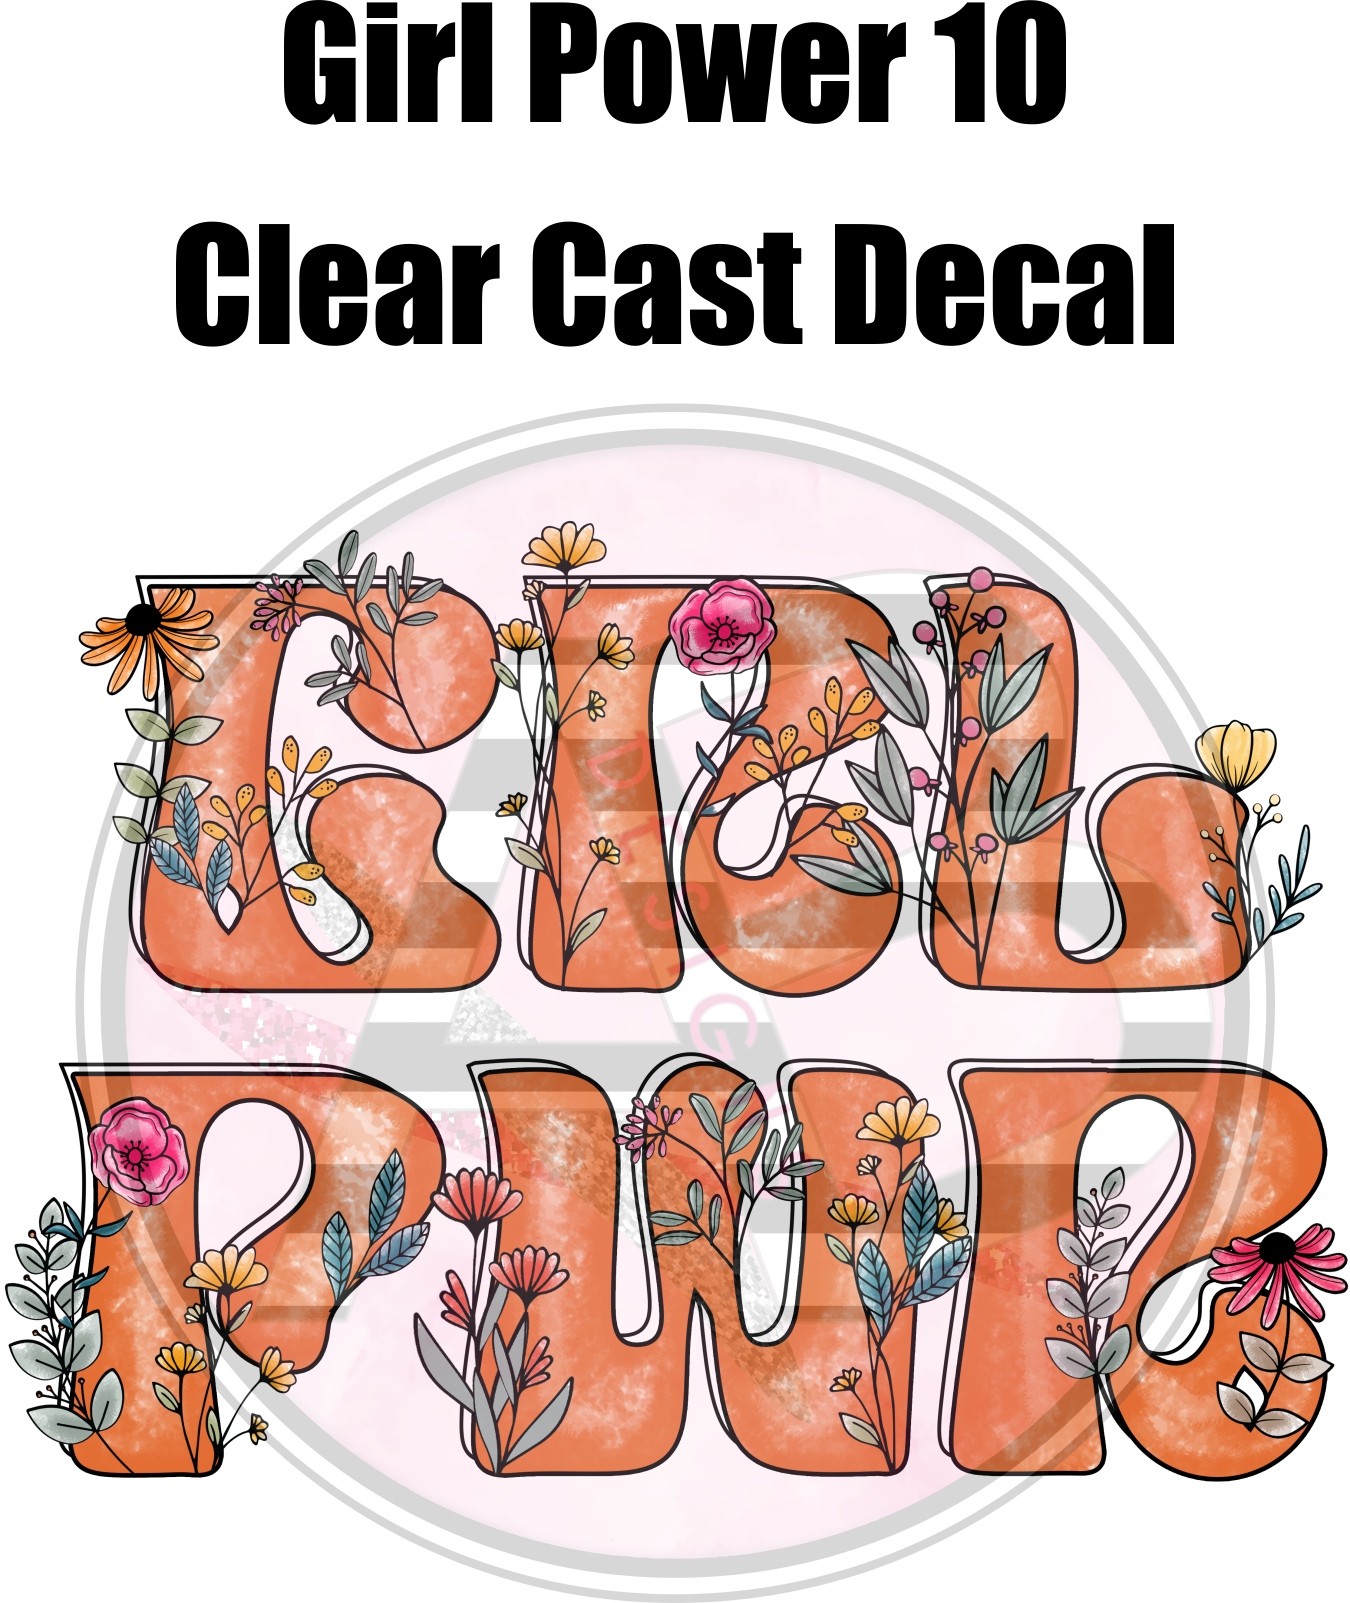 Girl Power 10 - Clear Cast Decal